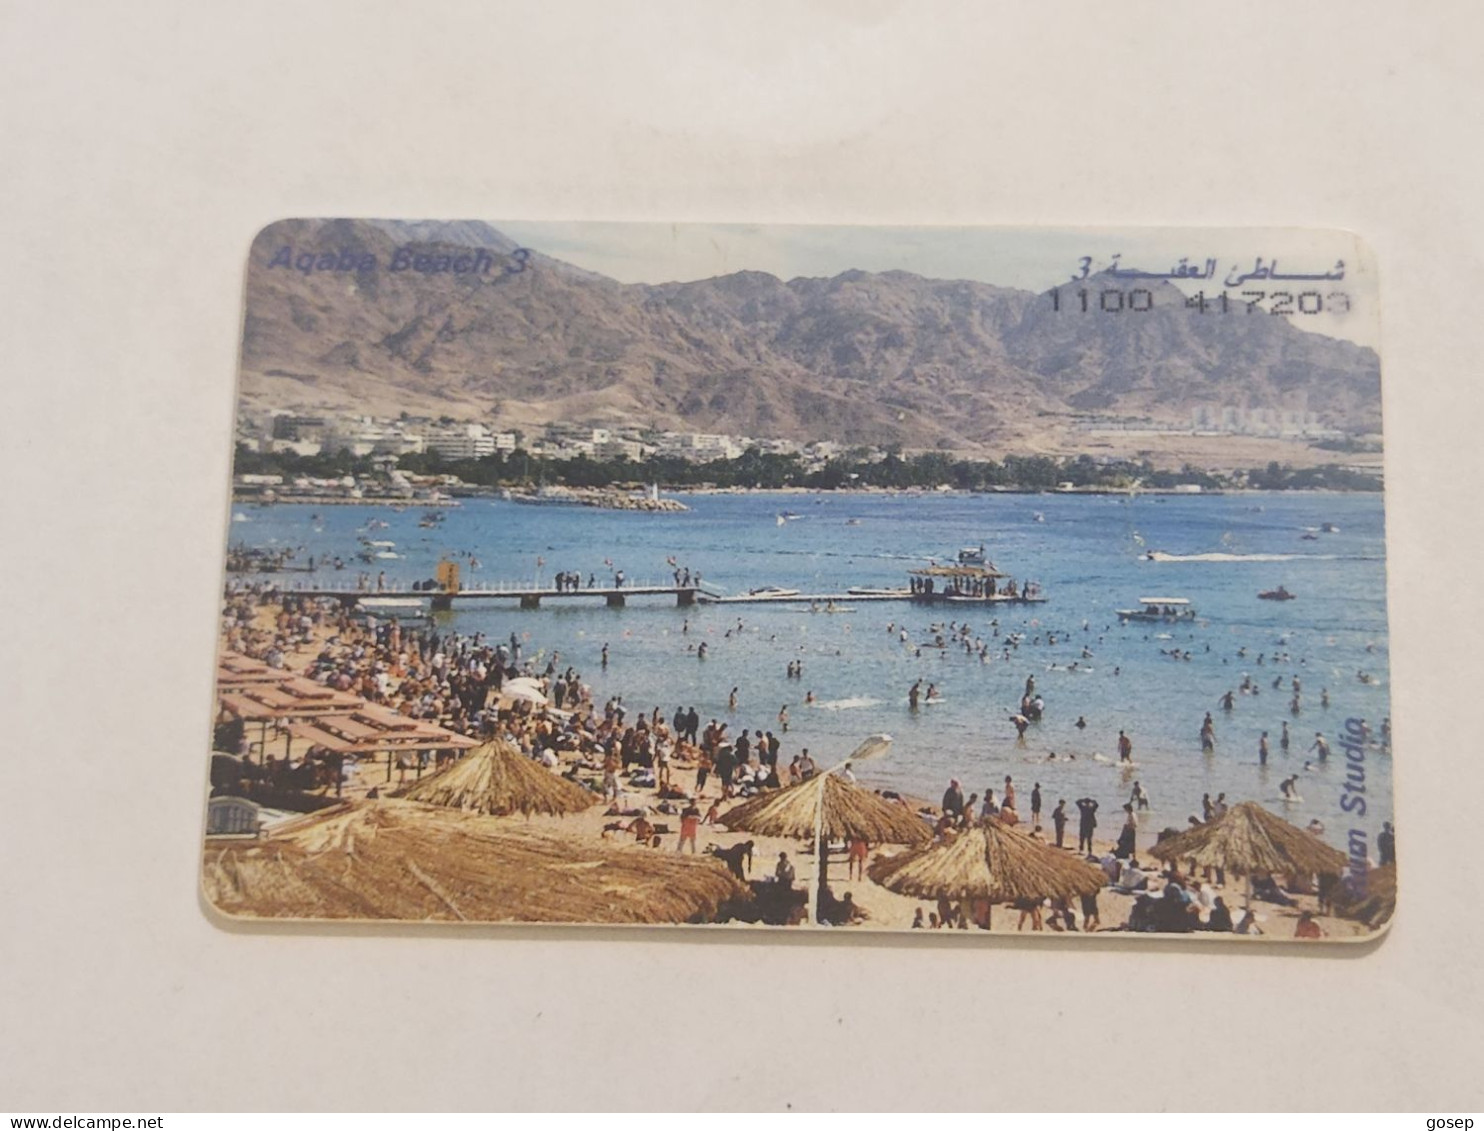 JORDAN-(JO-ALO-0027)-Aqaba Beach-(121)-(1100-417203)-(3JD)-(9/2000)-used Card+1card Prepiad Free - Jordania